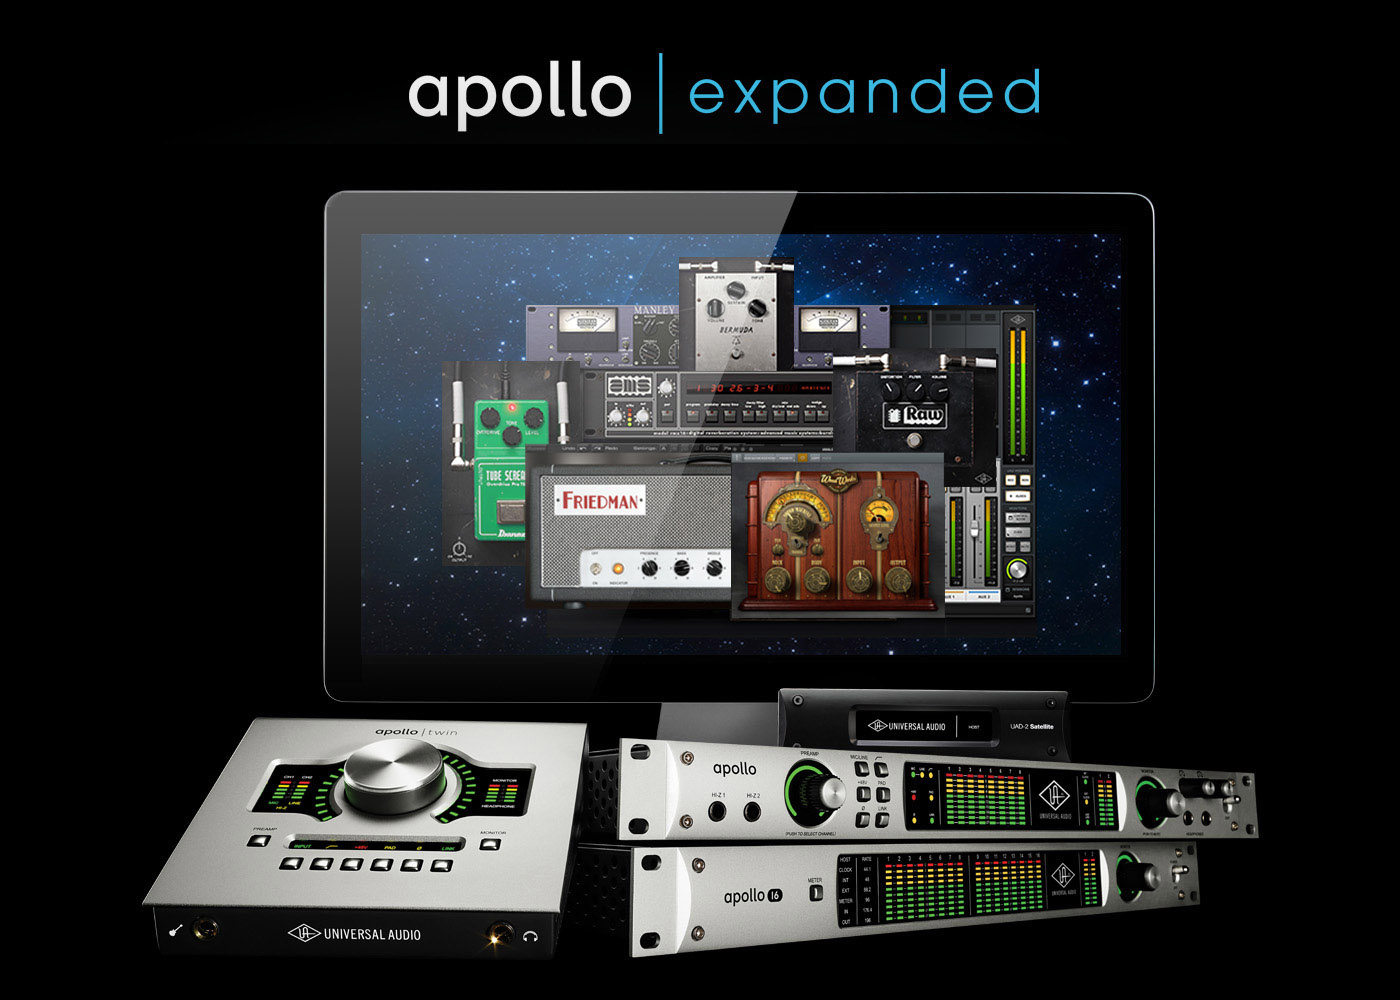 Apollo Expanded